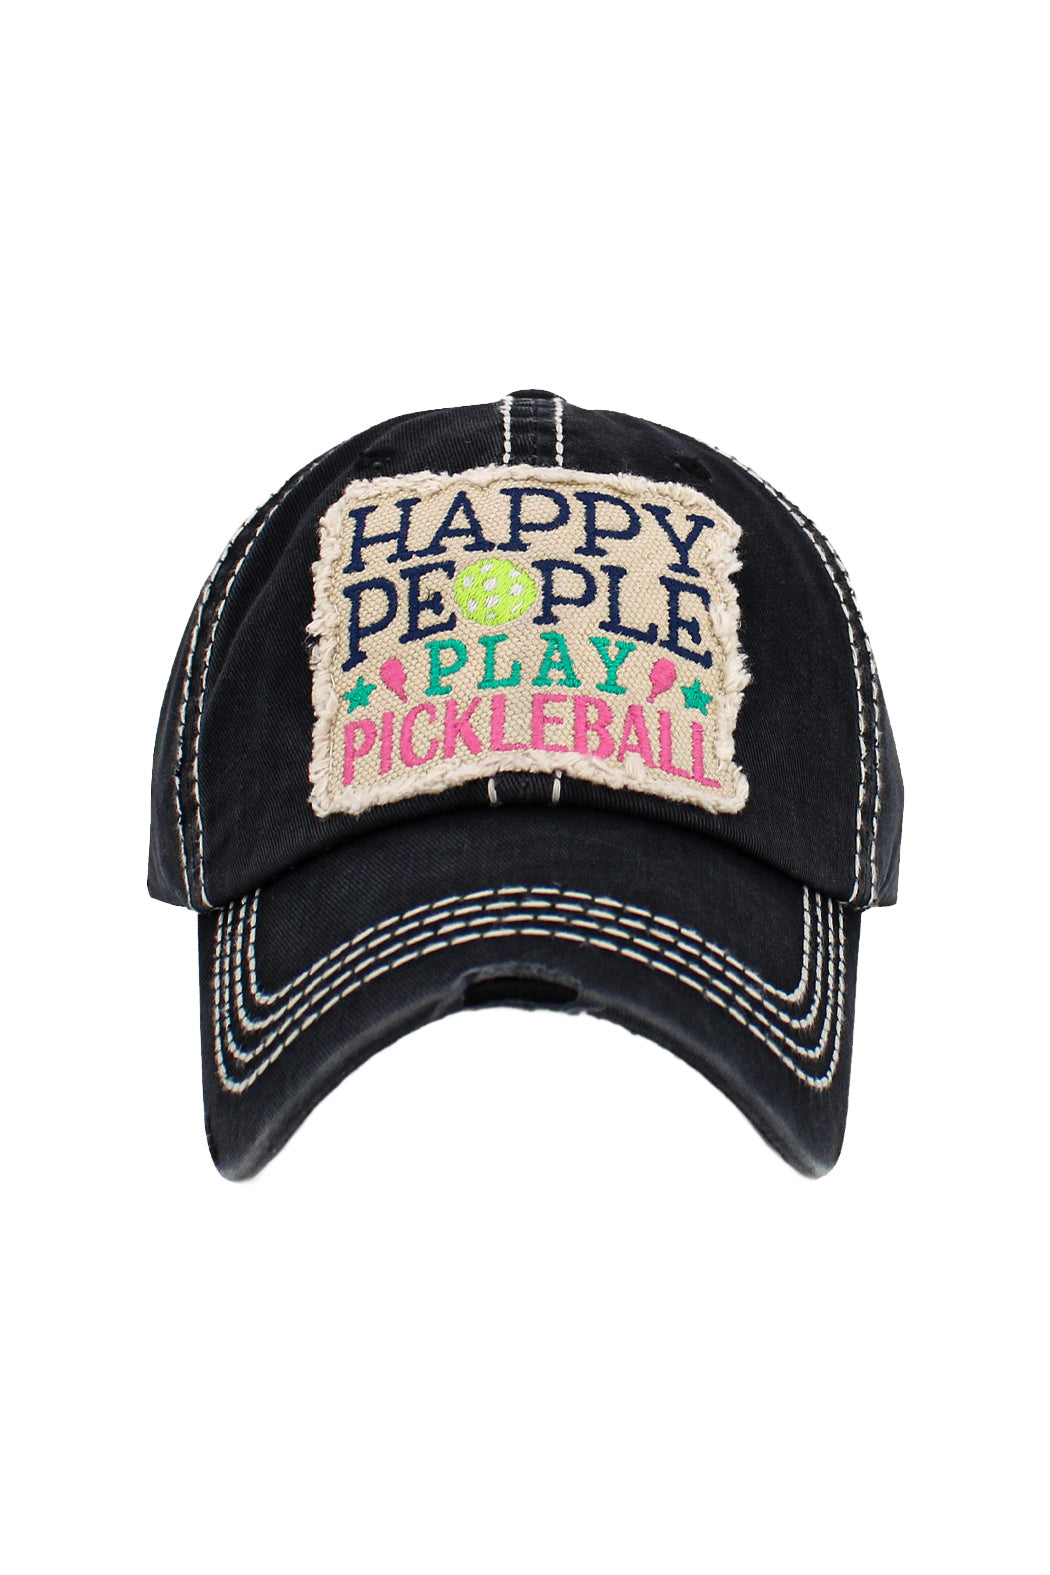 Happy People Play Pickleball Cap